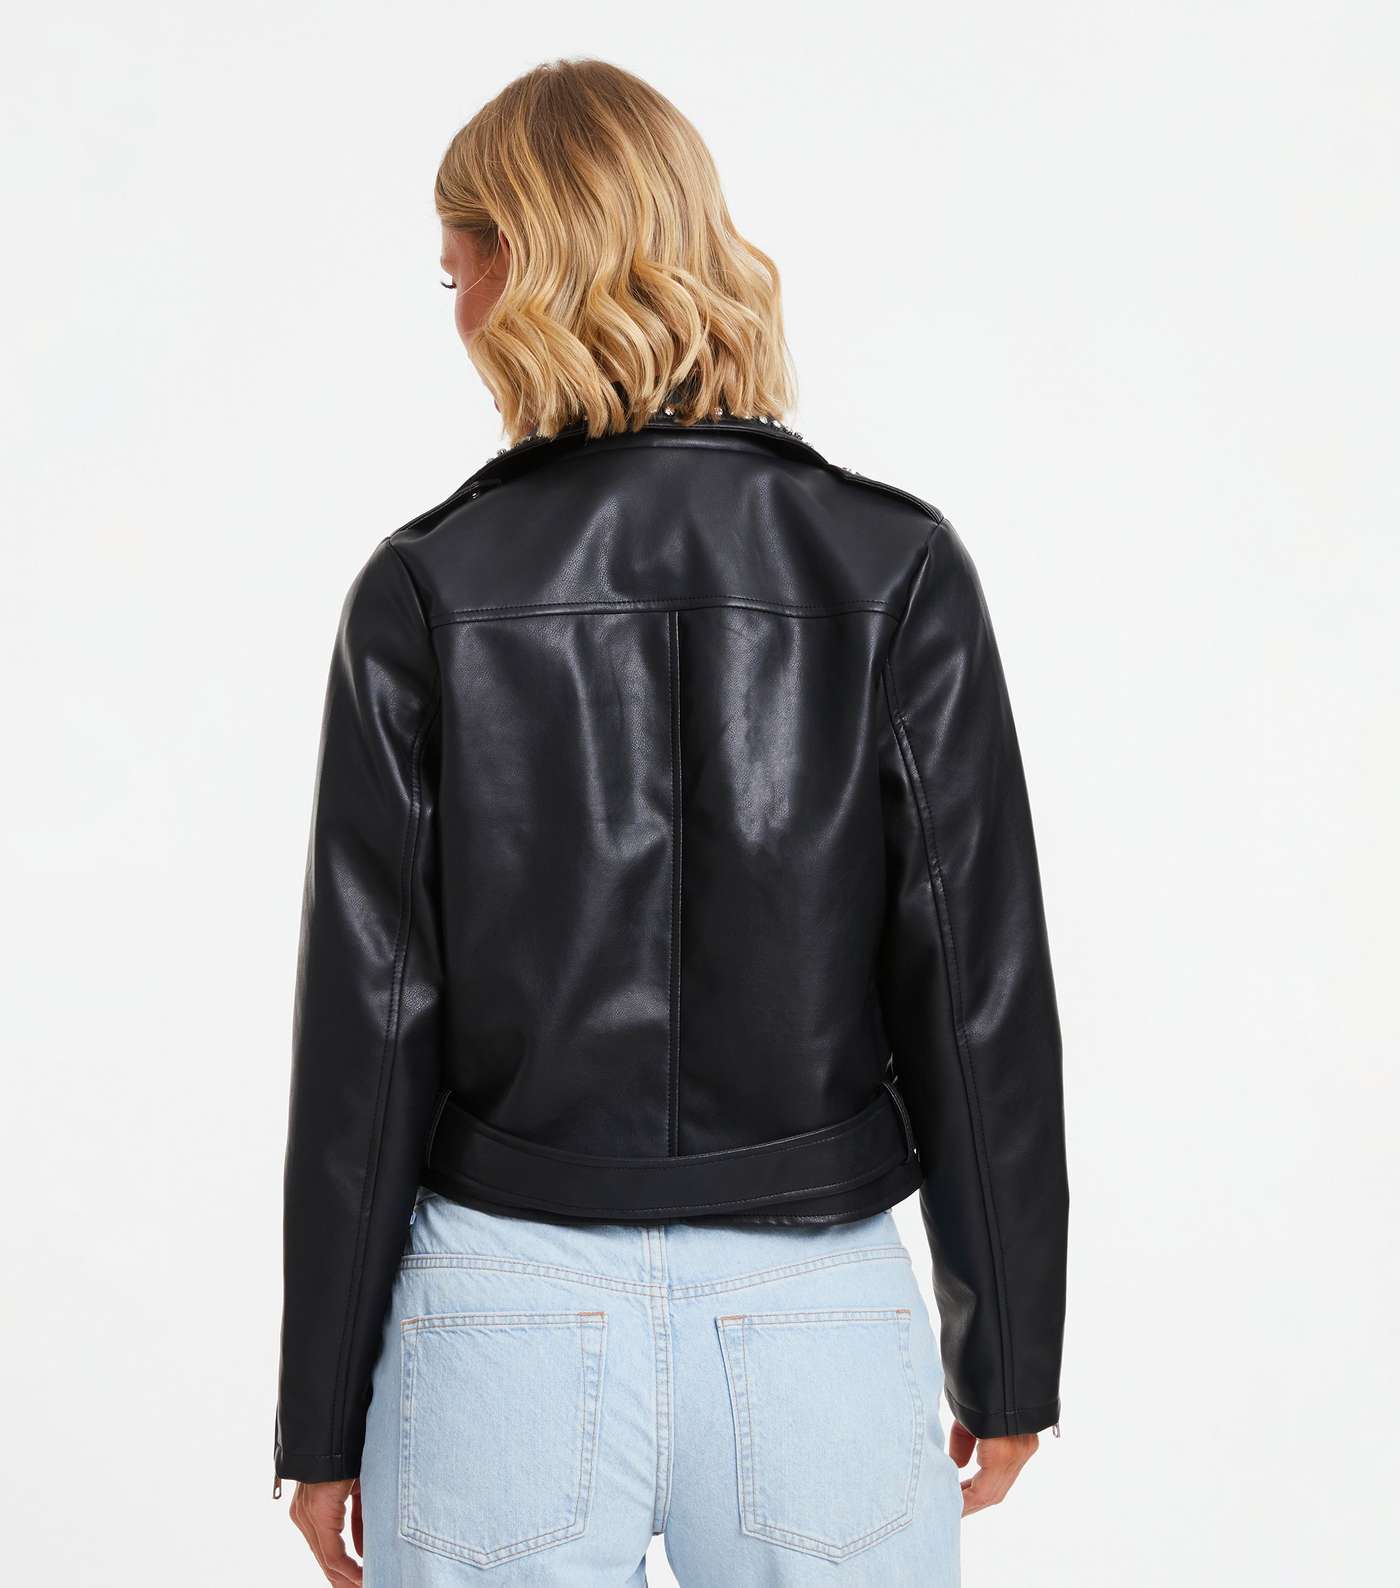 QUIZ Black Leather-Look Biker Jacket Image 3